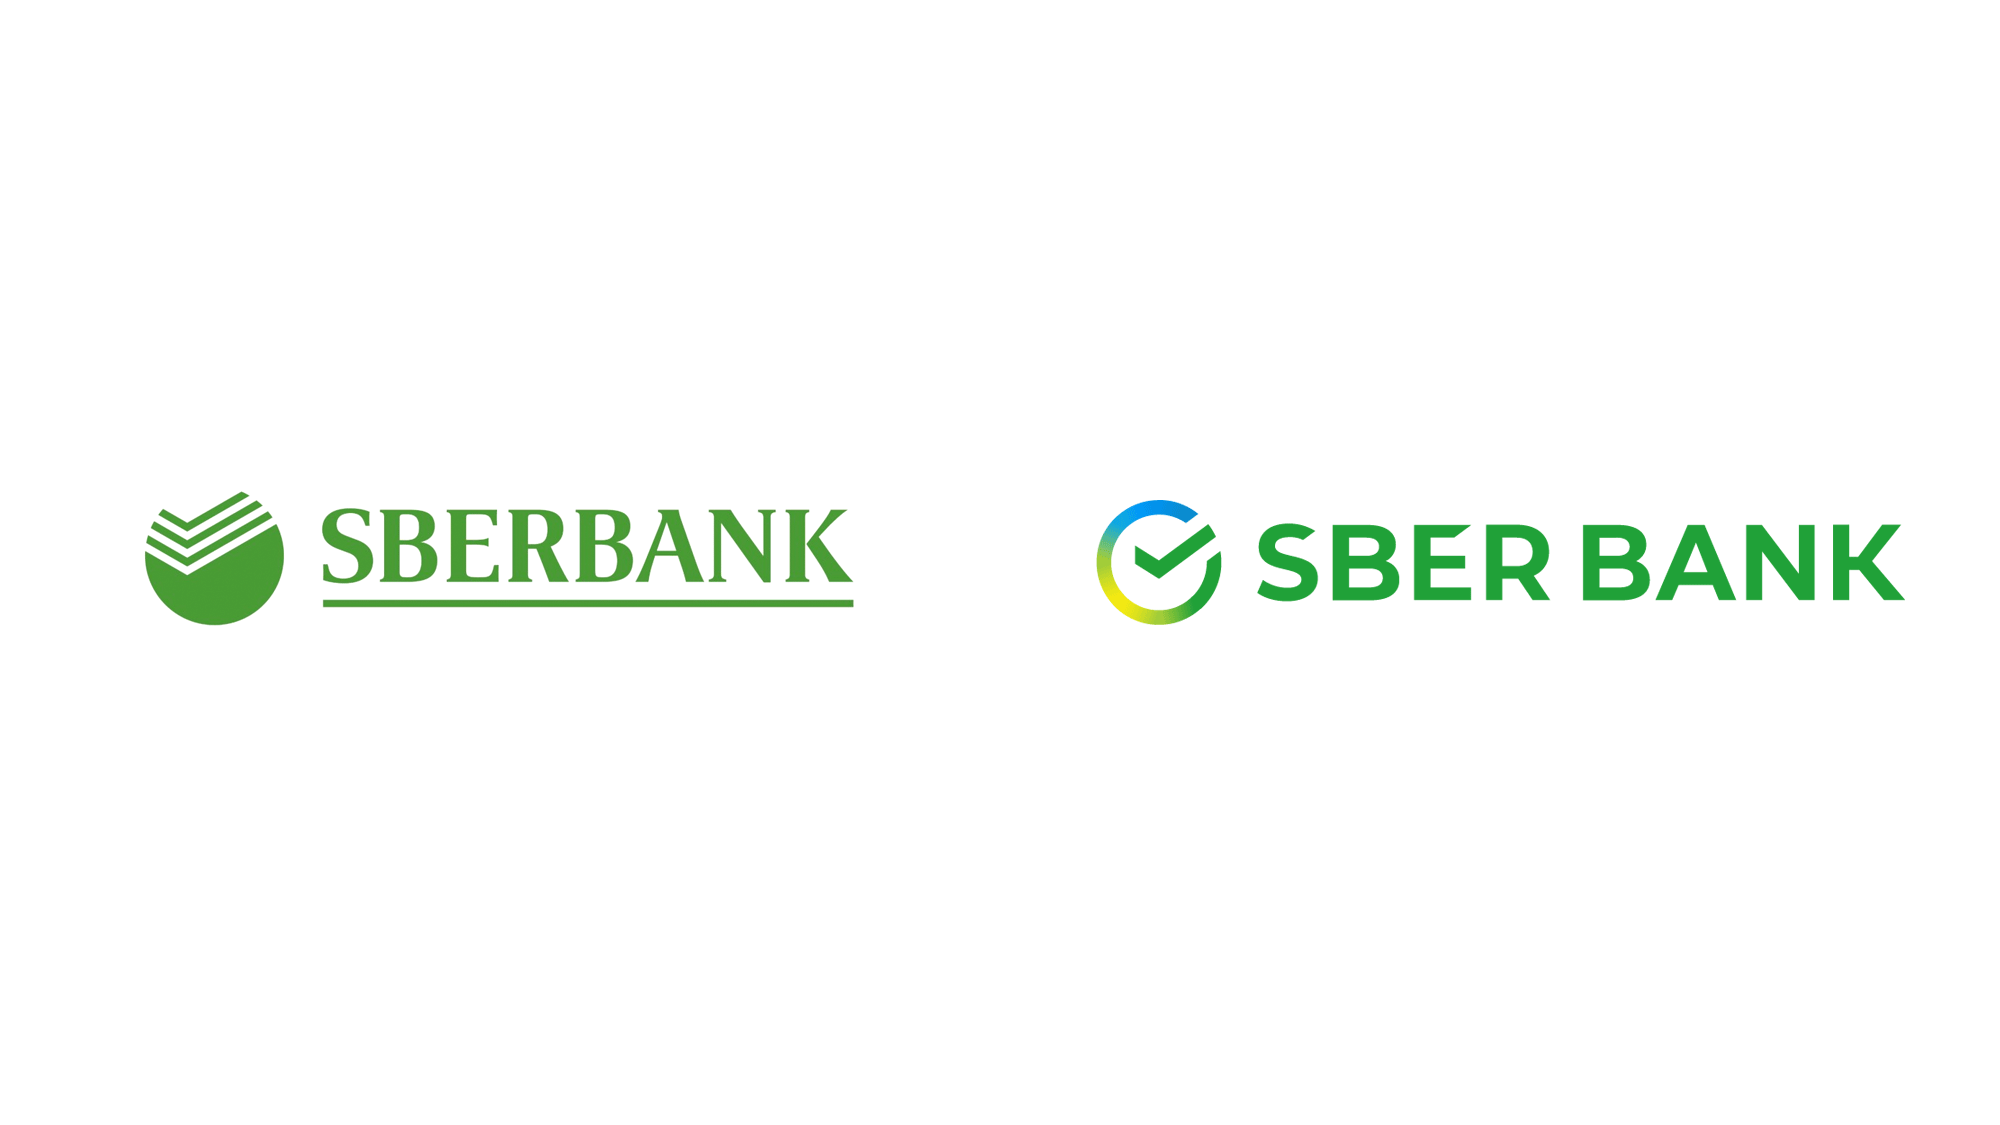 Cc wiki sberbank. Sber логотип. Сбербанк. Сбербанк логотип на английском. Сбербанк логотип на зеленом фоне.